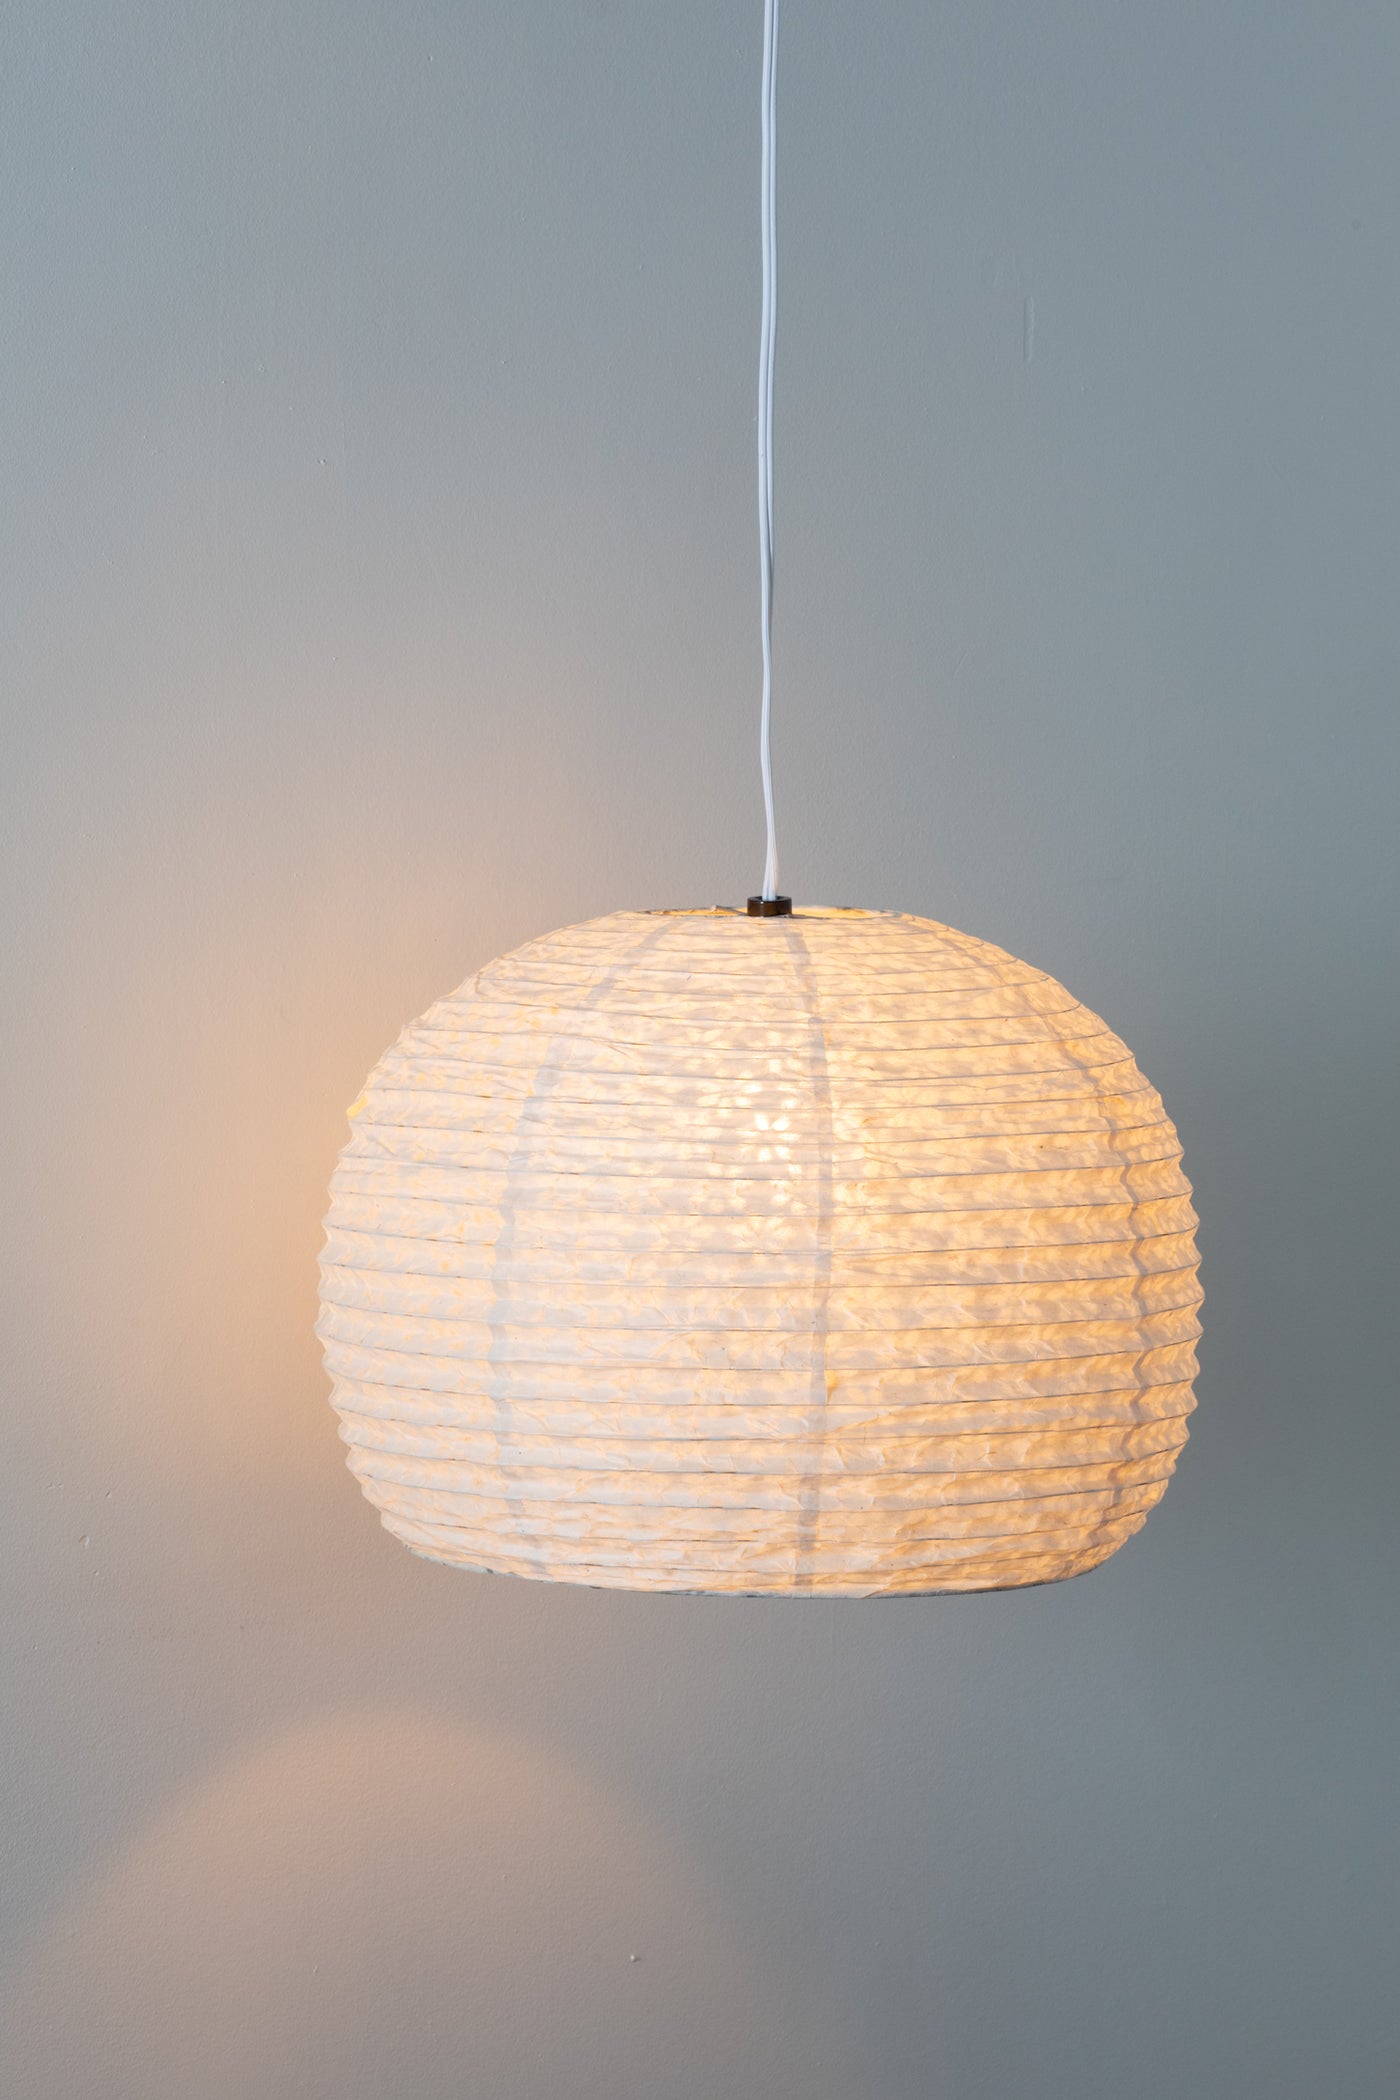 Handmade Globe Lotka Paper Lantern